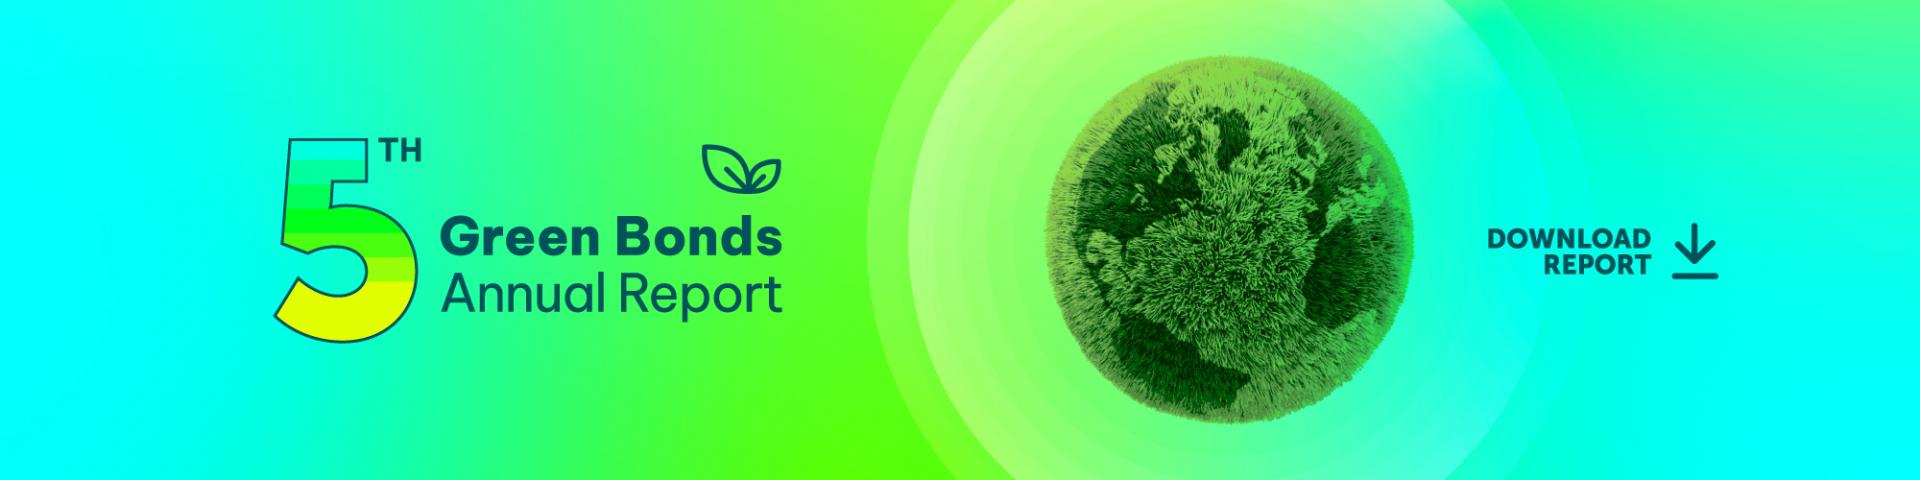 Banner Green Bonds Annual Report web